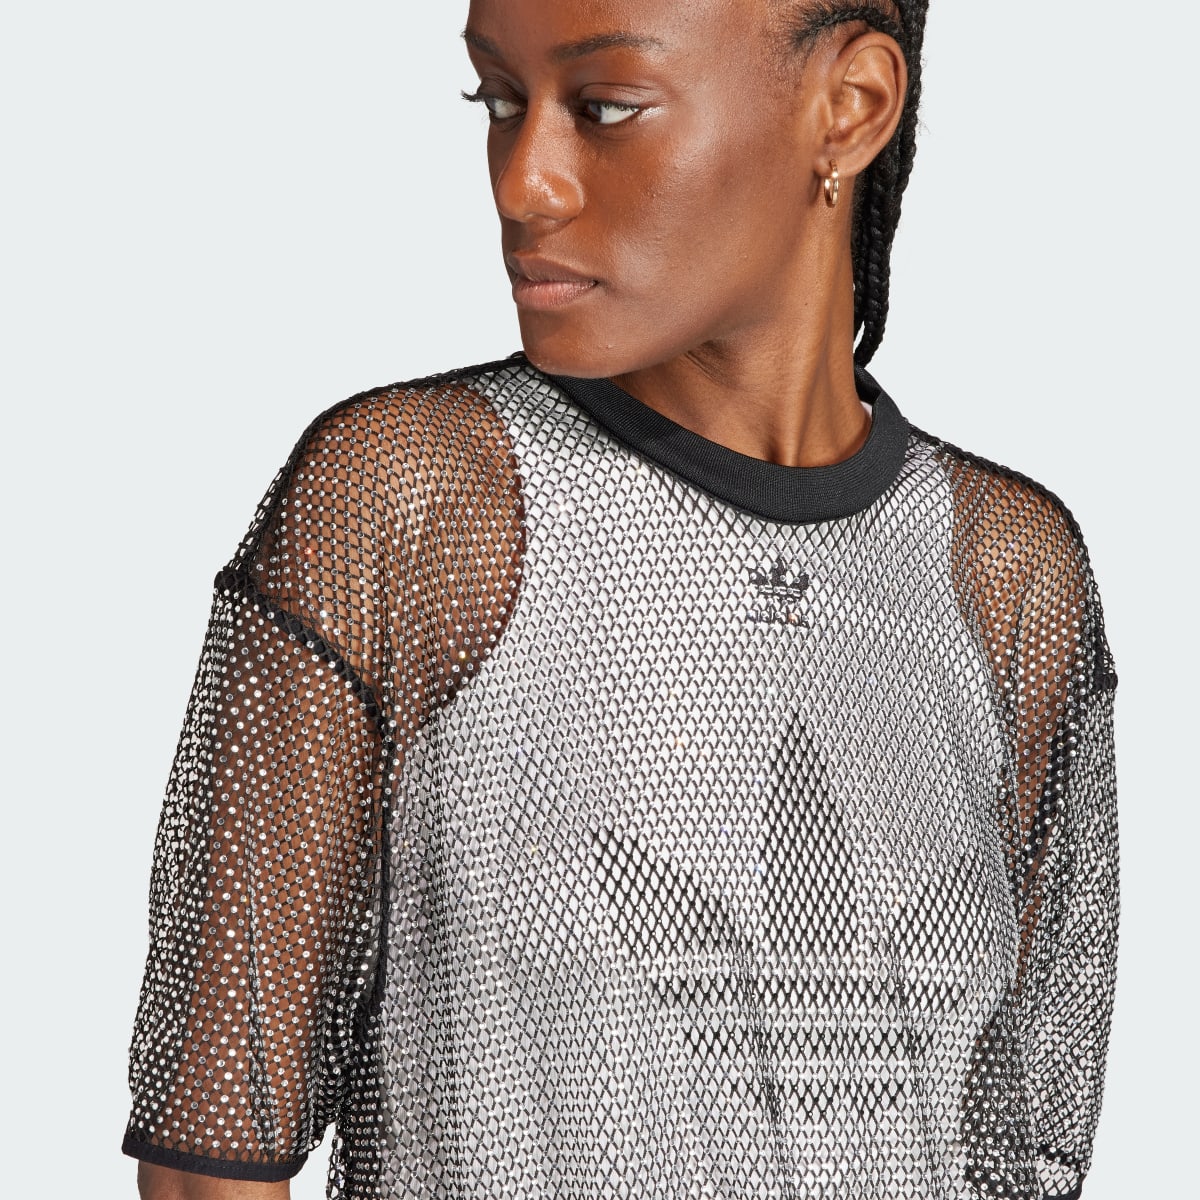 Adidas Adilenium Rhinestone T-Shirt. 6